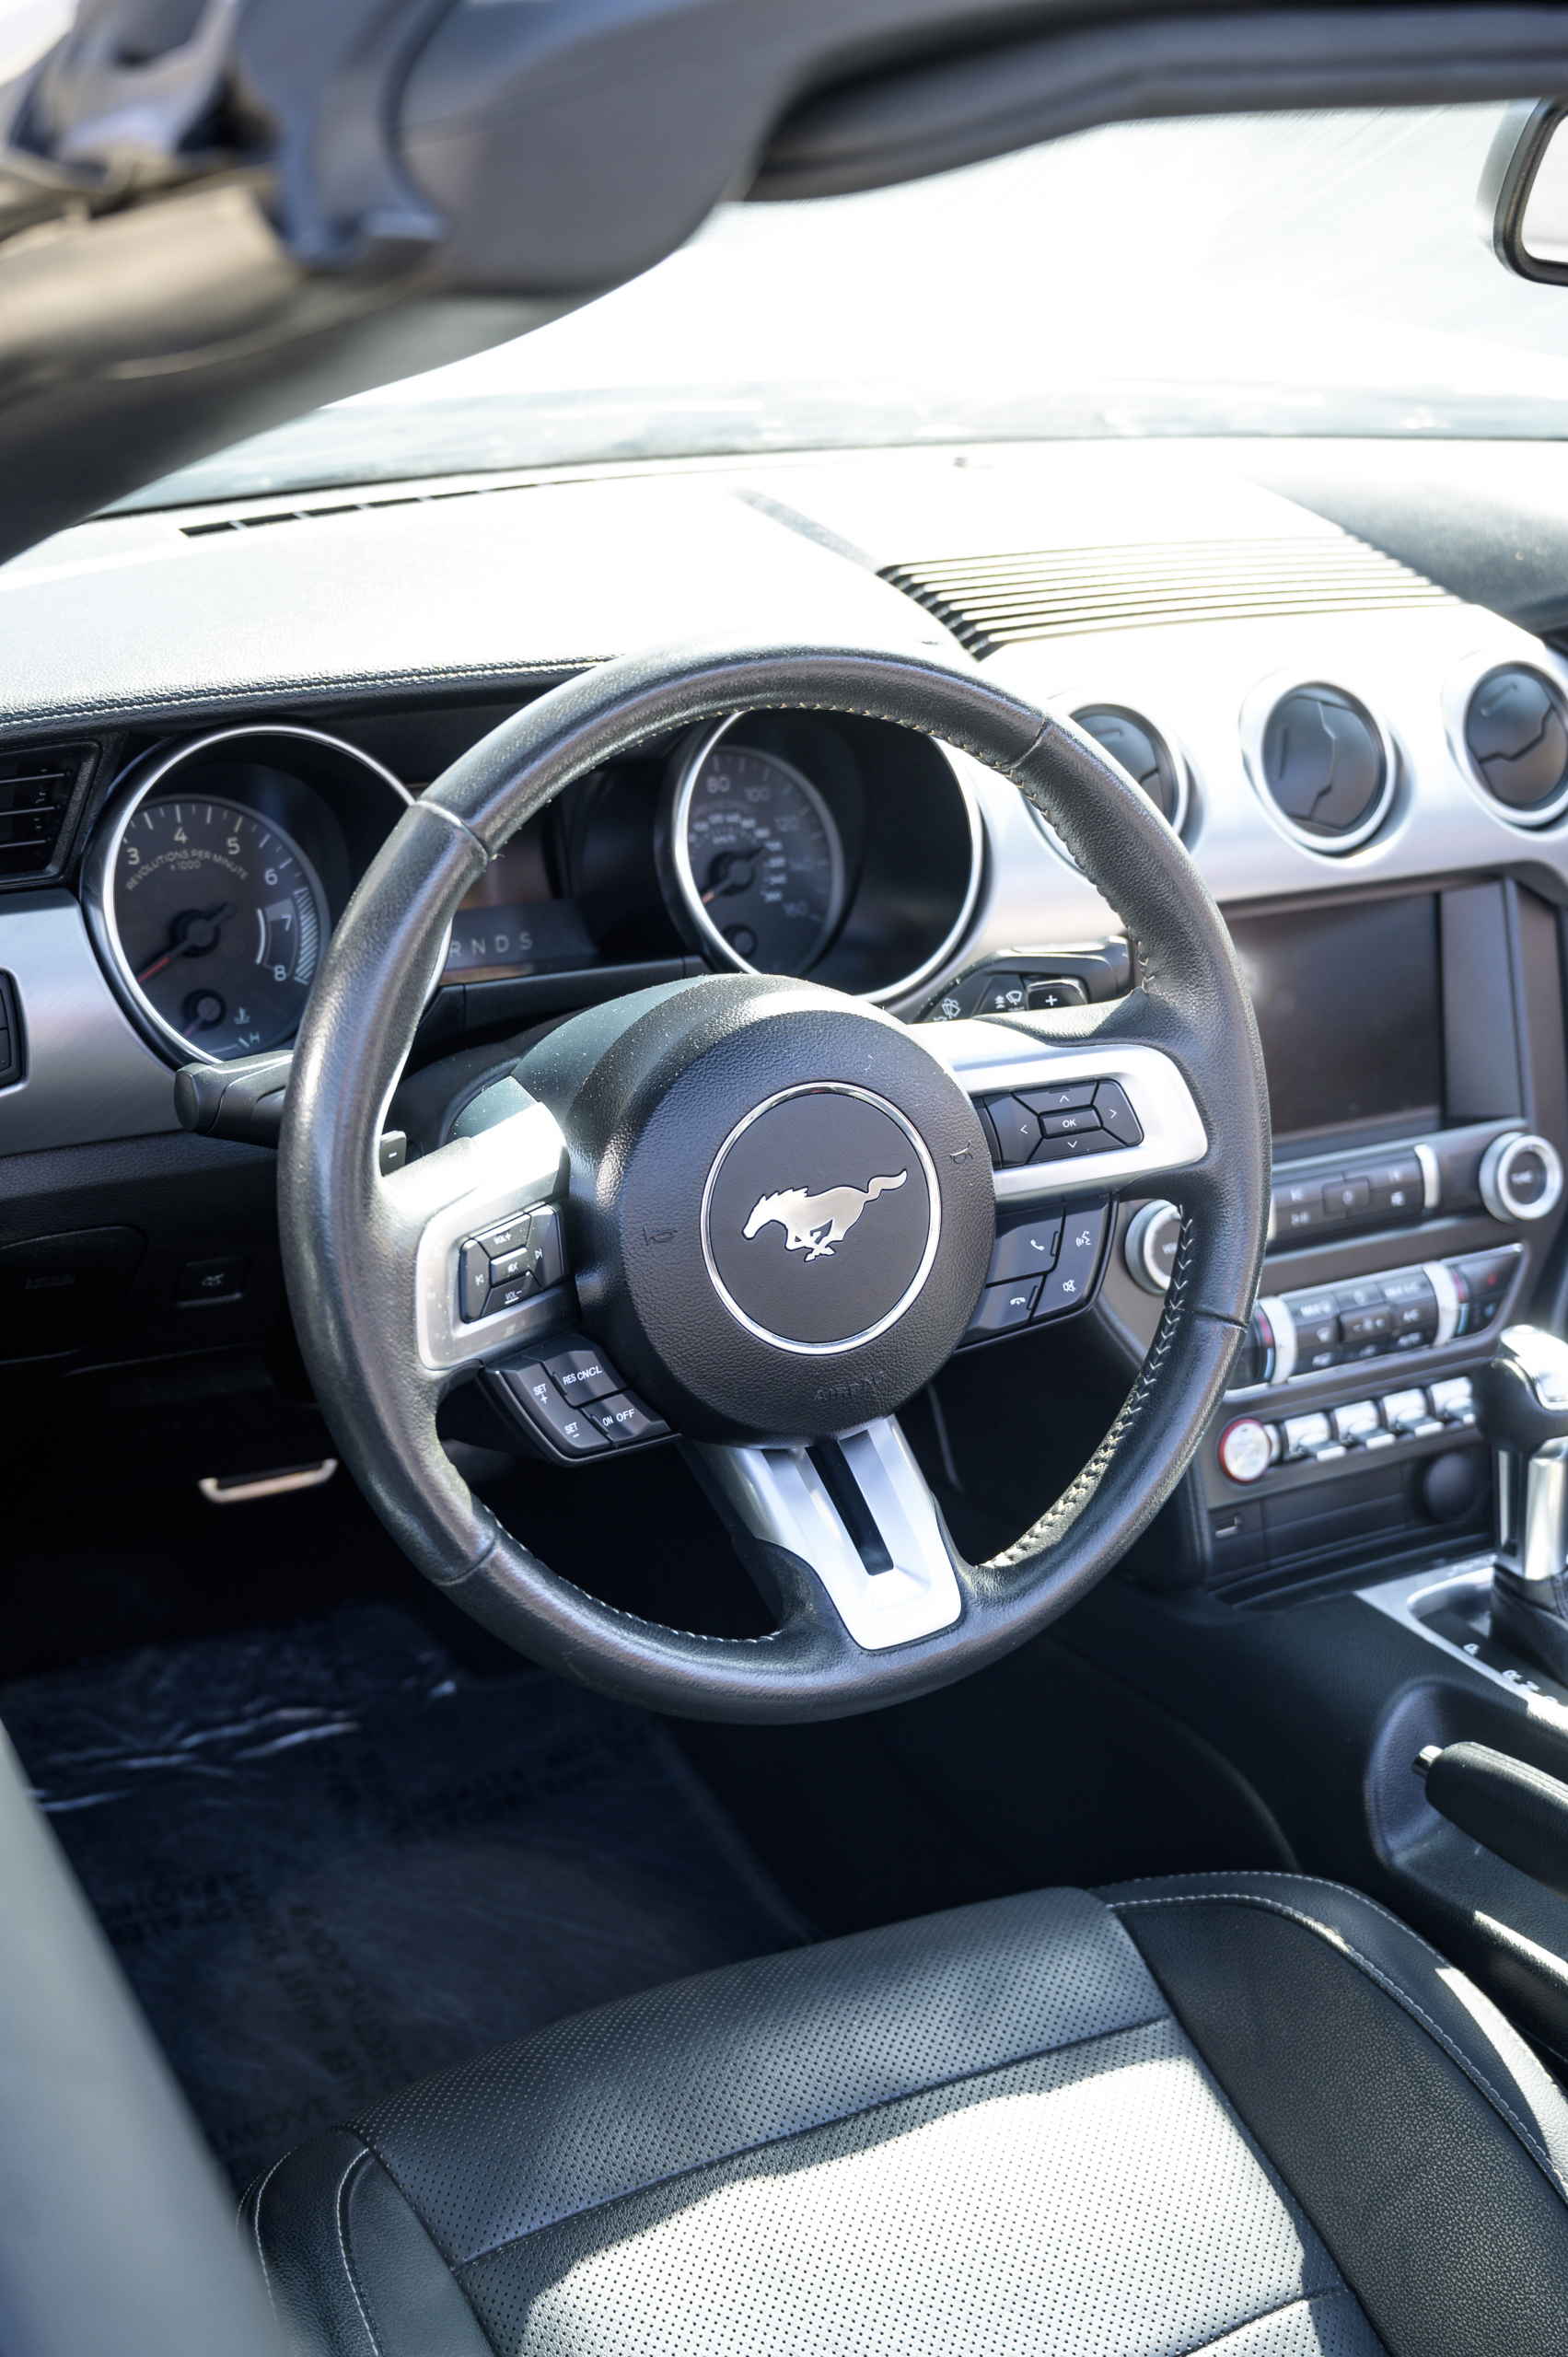 2019 Mustang Cabriolet zu verkaufen Germany